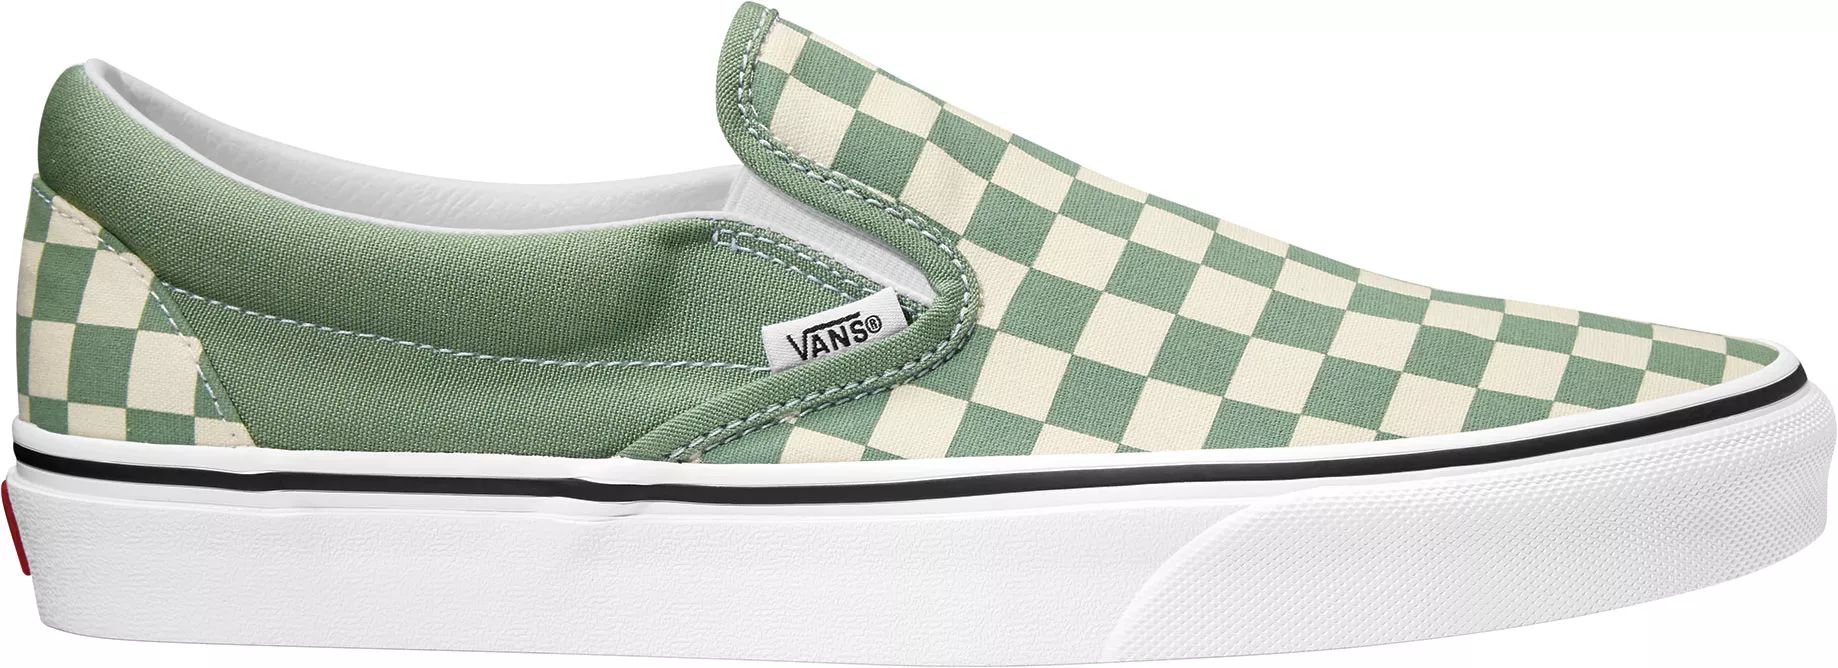 Vans Classic Slip-On Shoes, Women's, Green | Dick's Sporting Goods